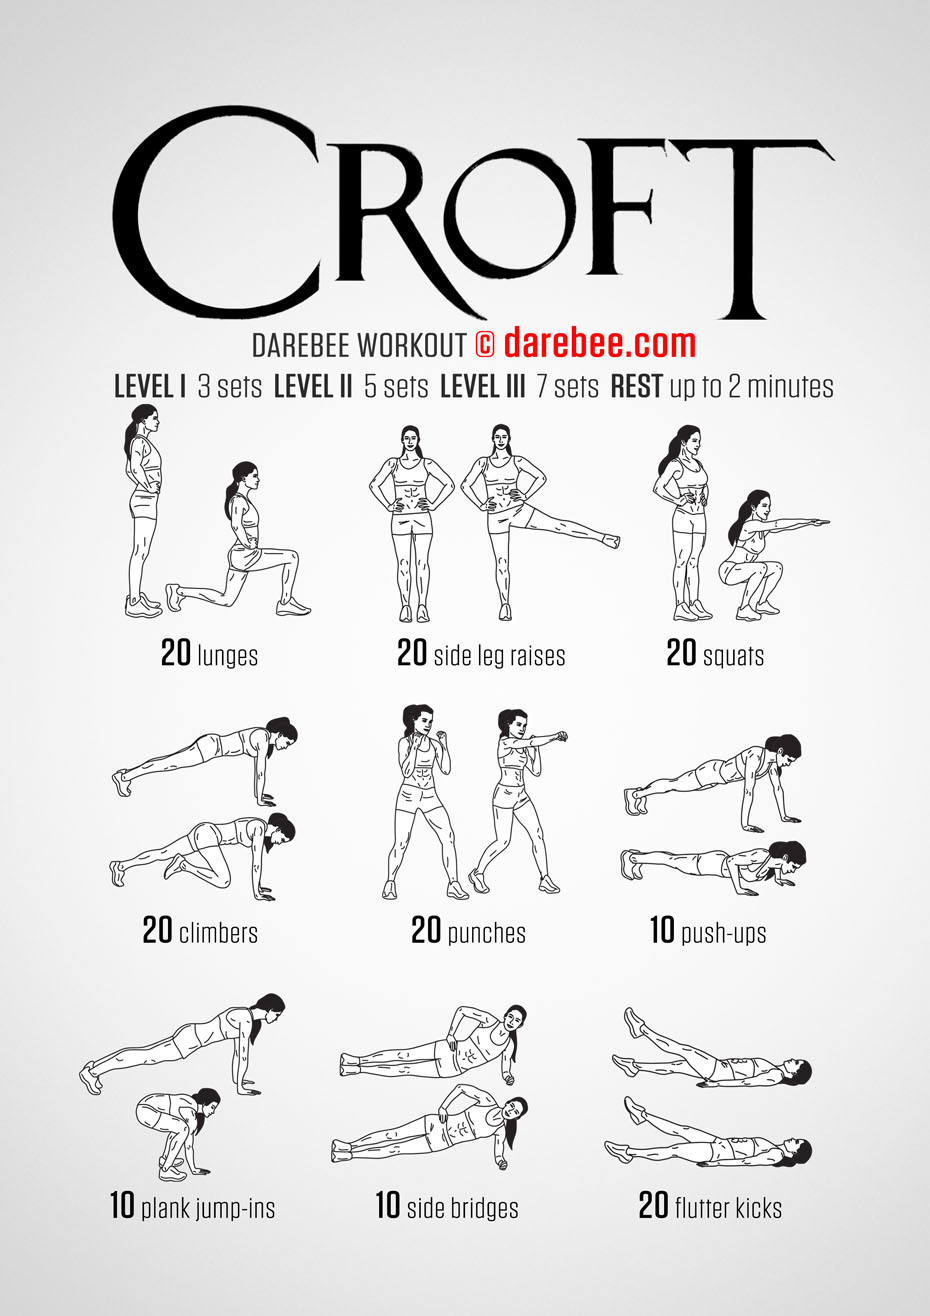  Lara croft workout plan for Fat Body